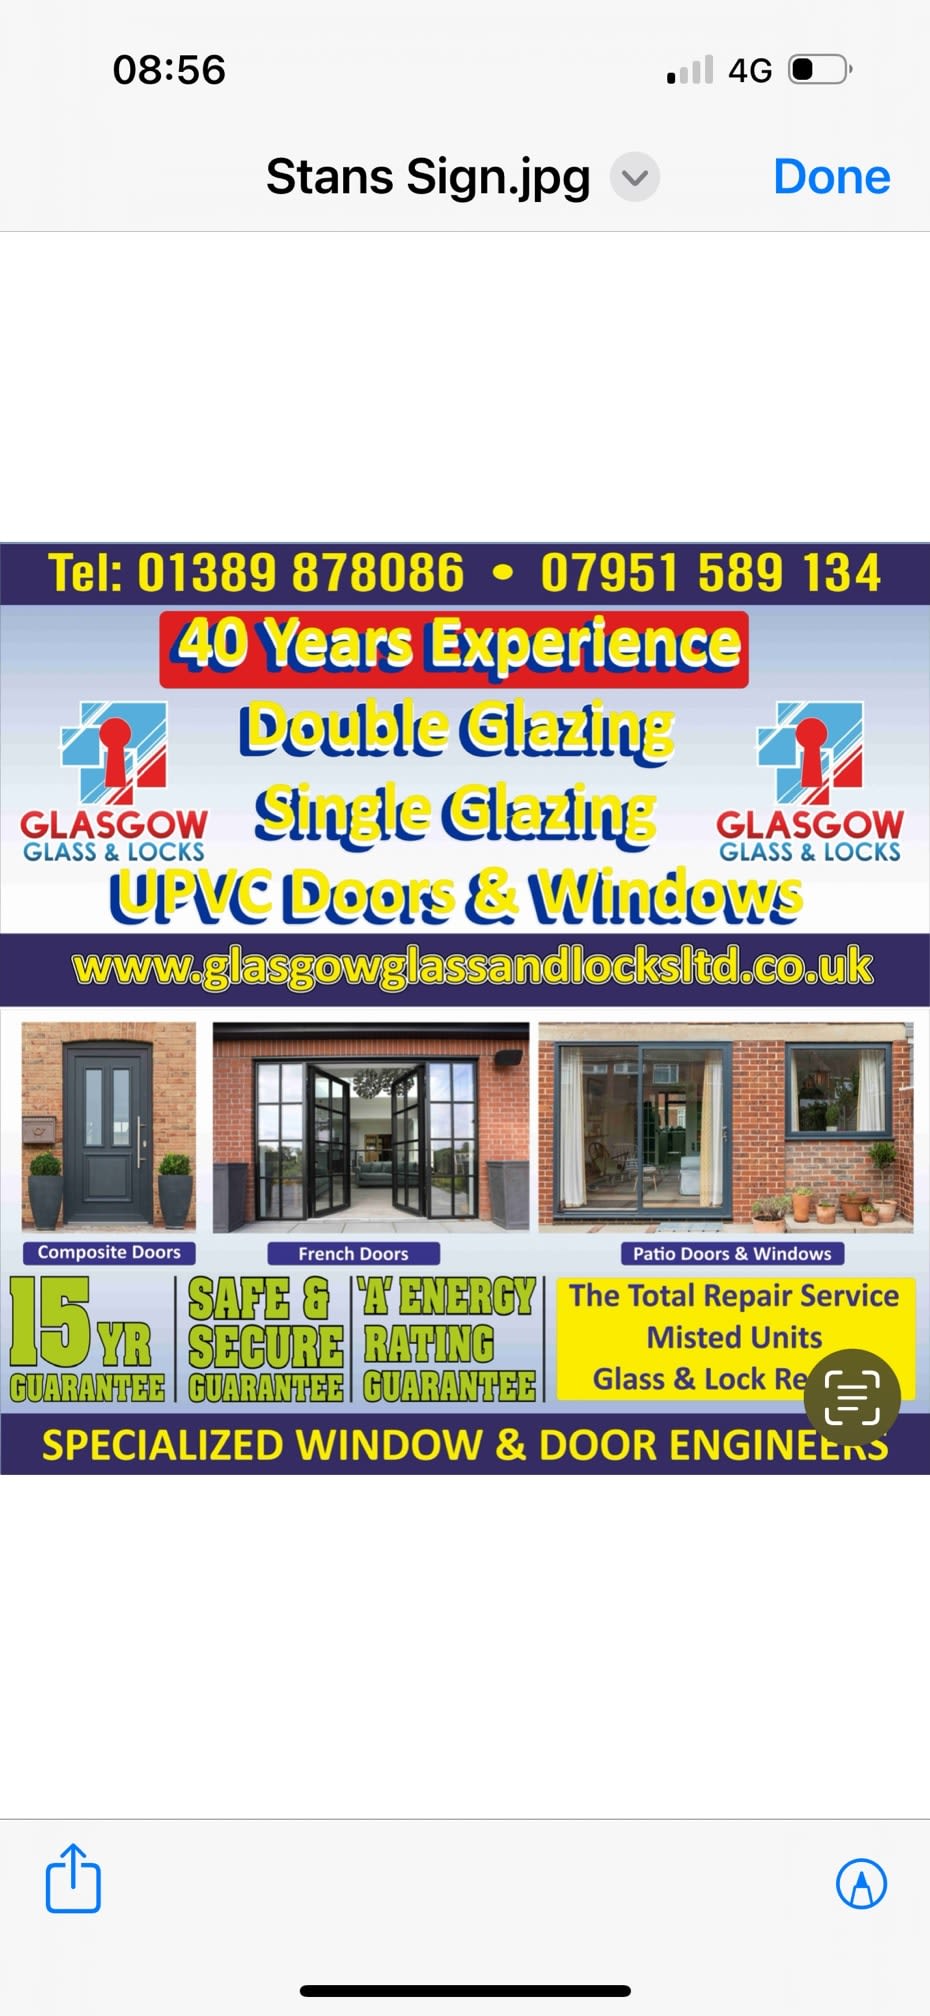 Images Glasgow Glass And Locks Ltd